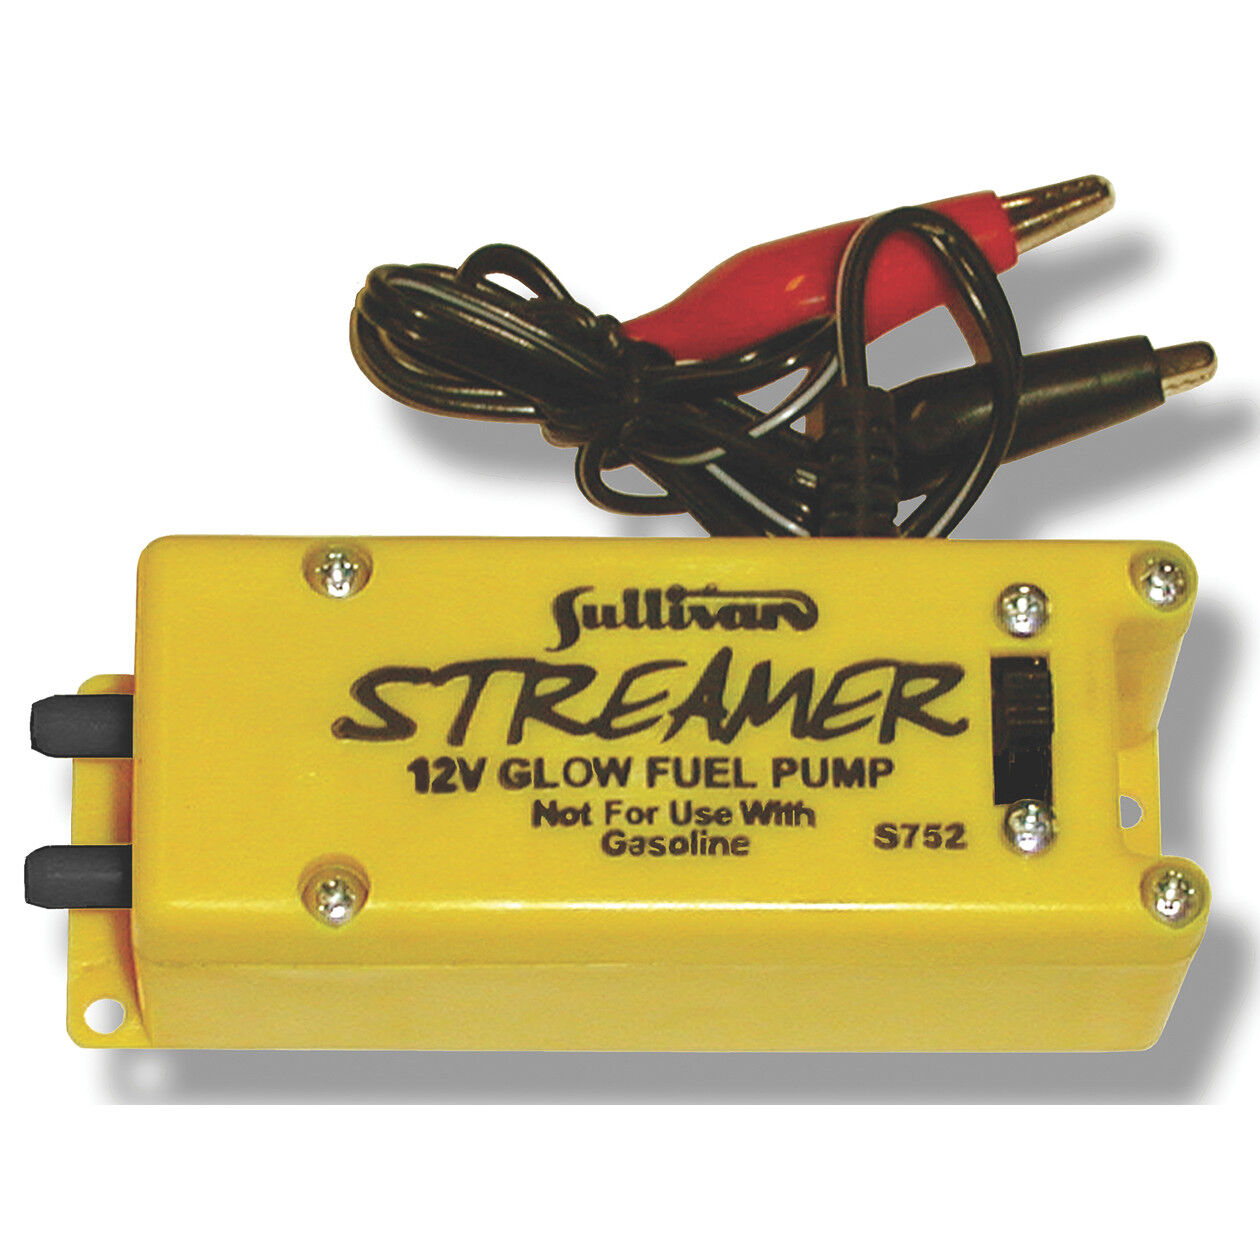 Sullivan Products 752 Streamer 12v Glow Fuel Pump for sale online 